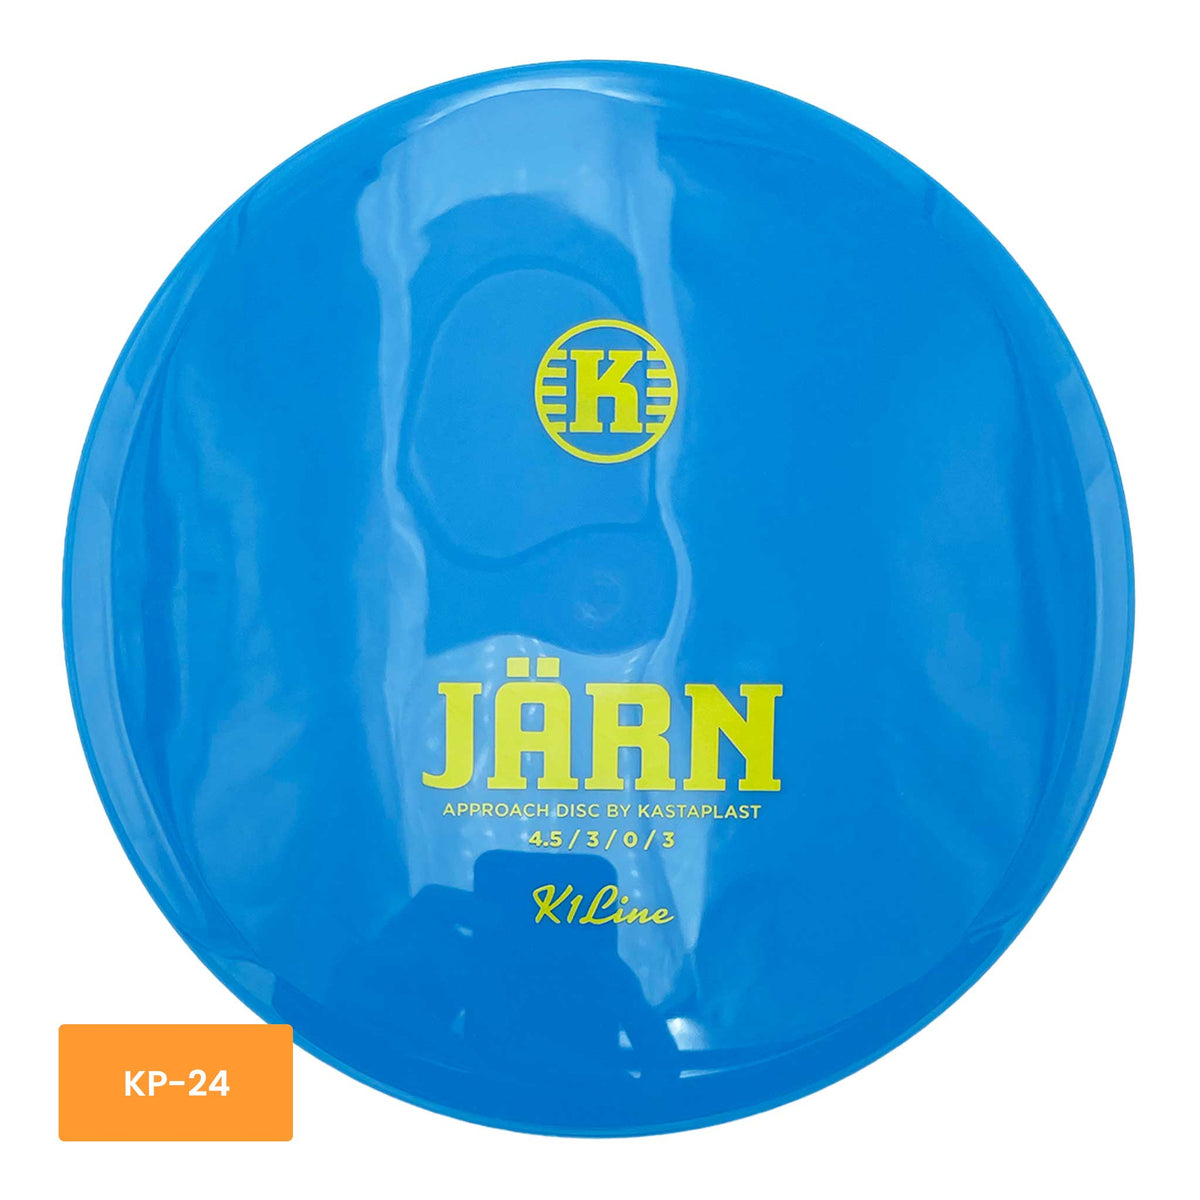 Kastaplast K1 Järn approach disc - Blue / Yellow